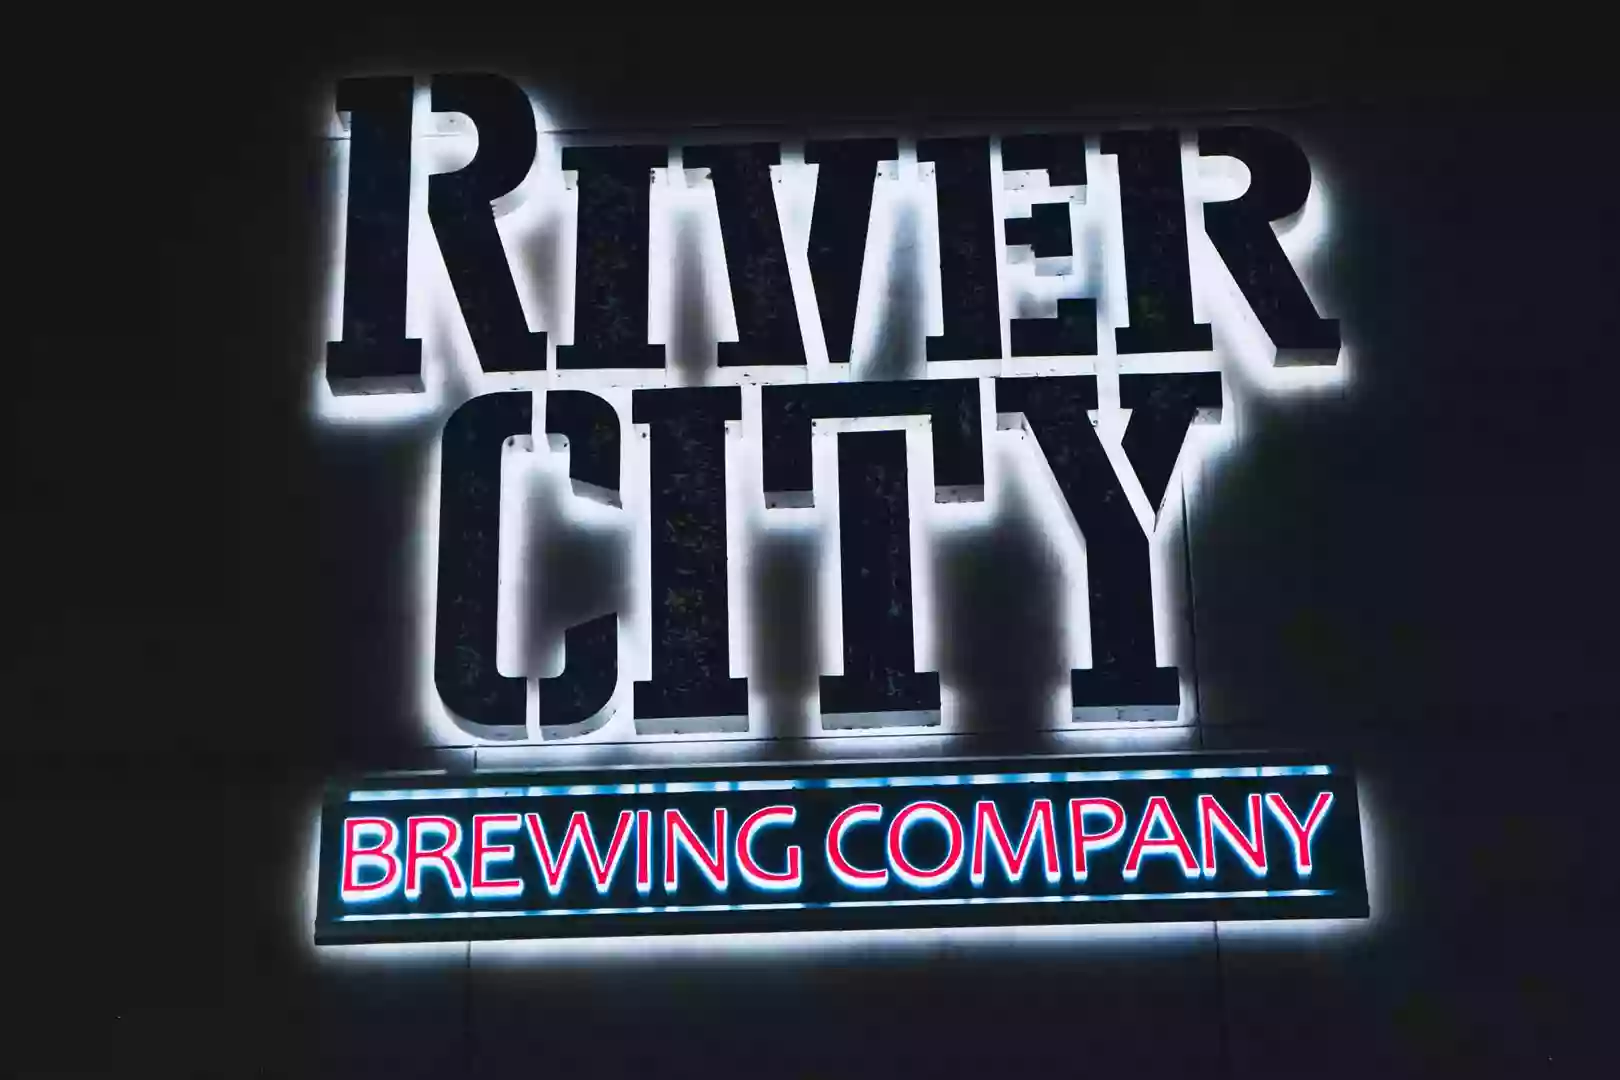 River City Brewing Company